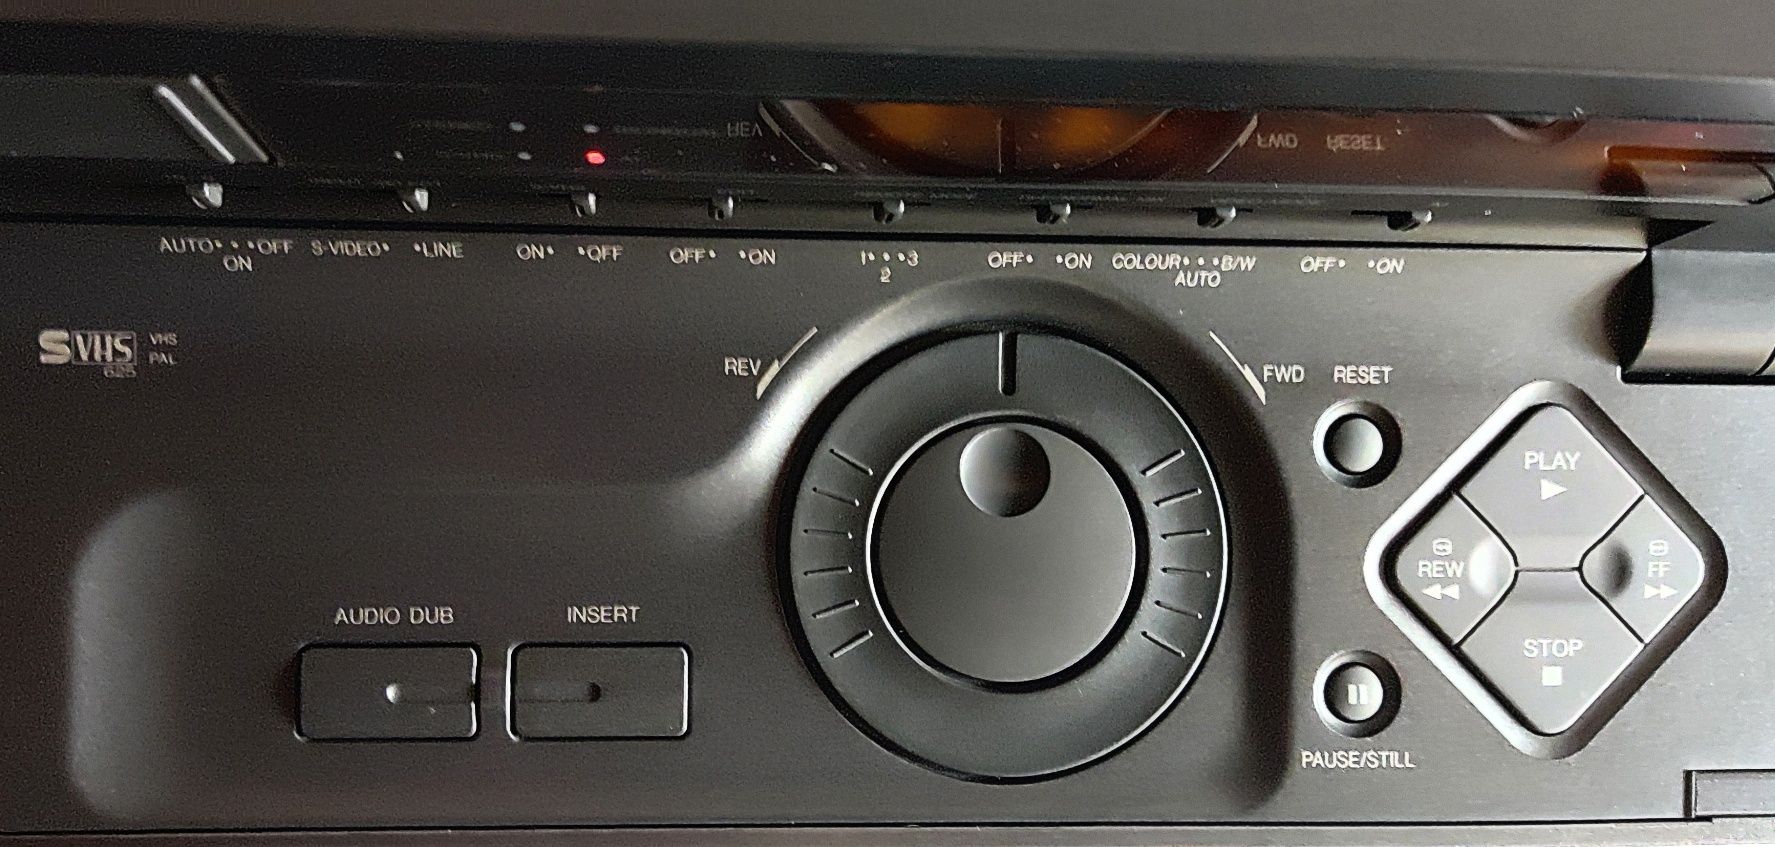 Panasonic NV-HS800 S-VHS Hi-Fi stereo